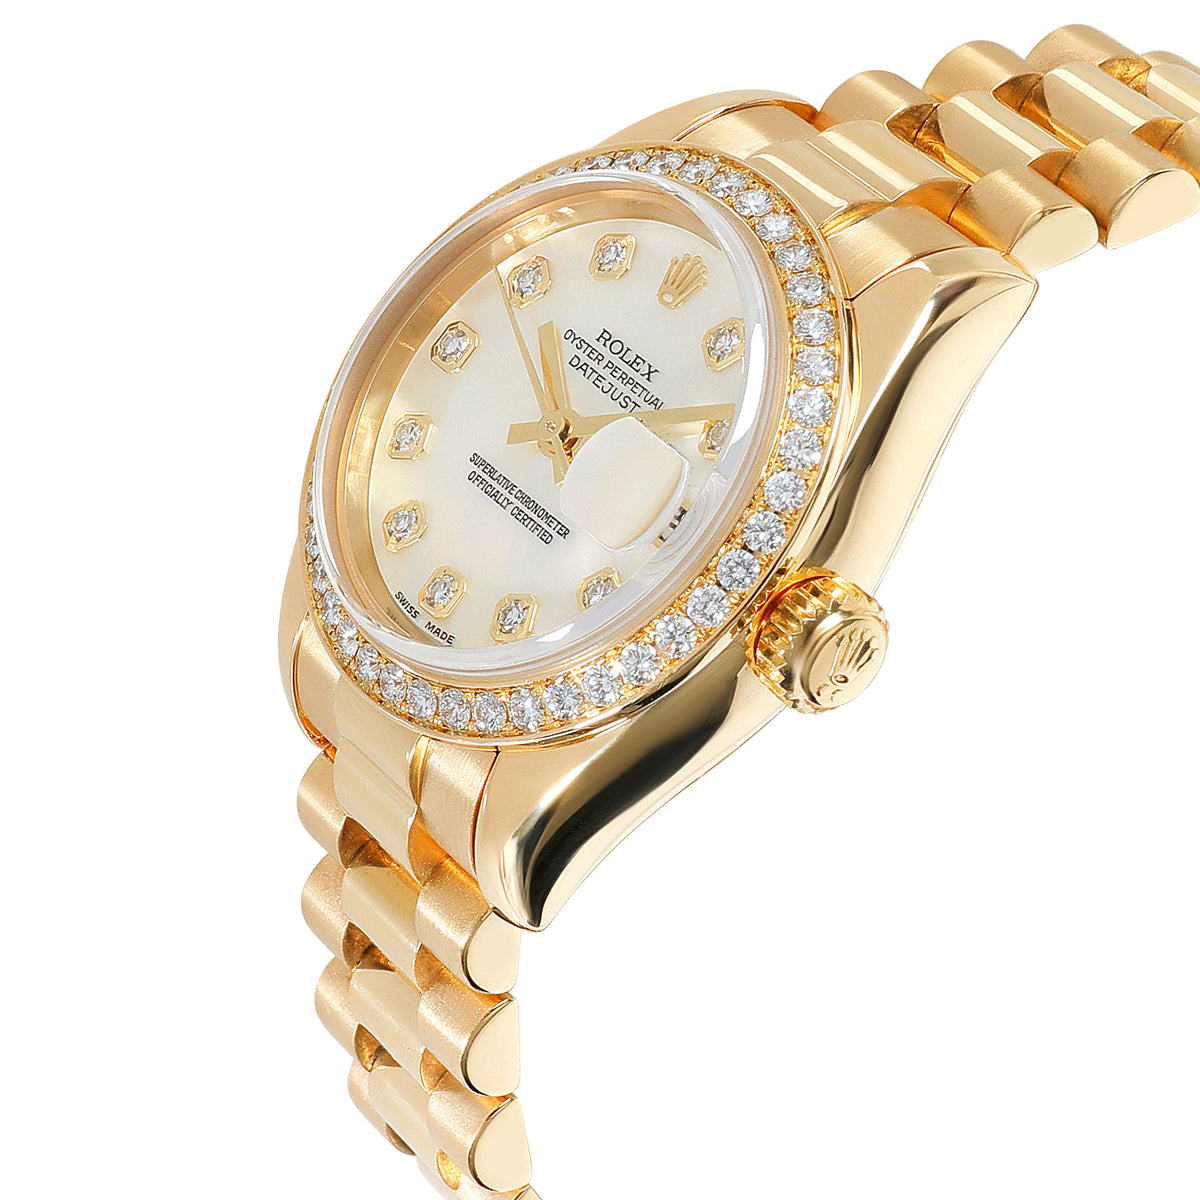 Rolex Datejust 179138 Women's Watch in 18kt Yellow Gold